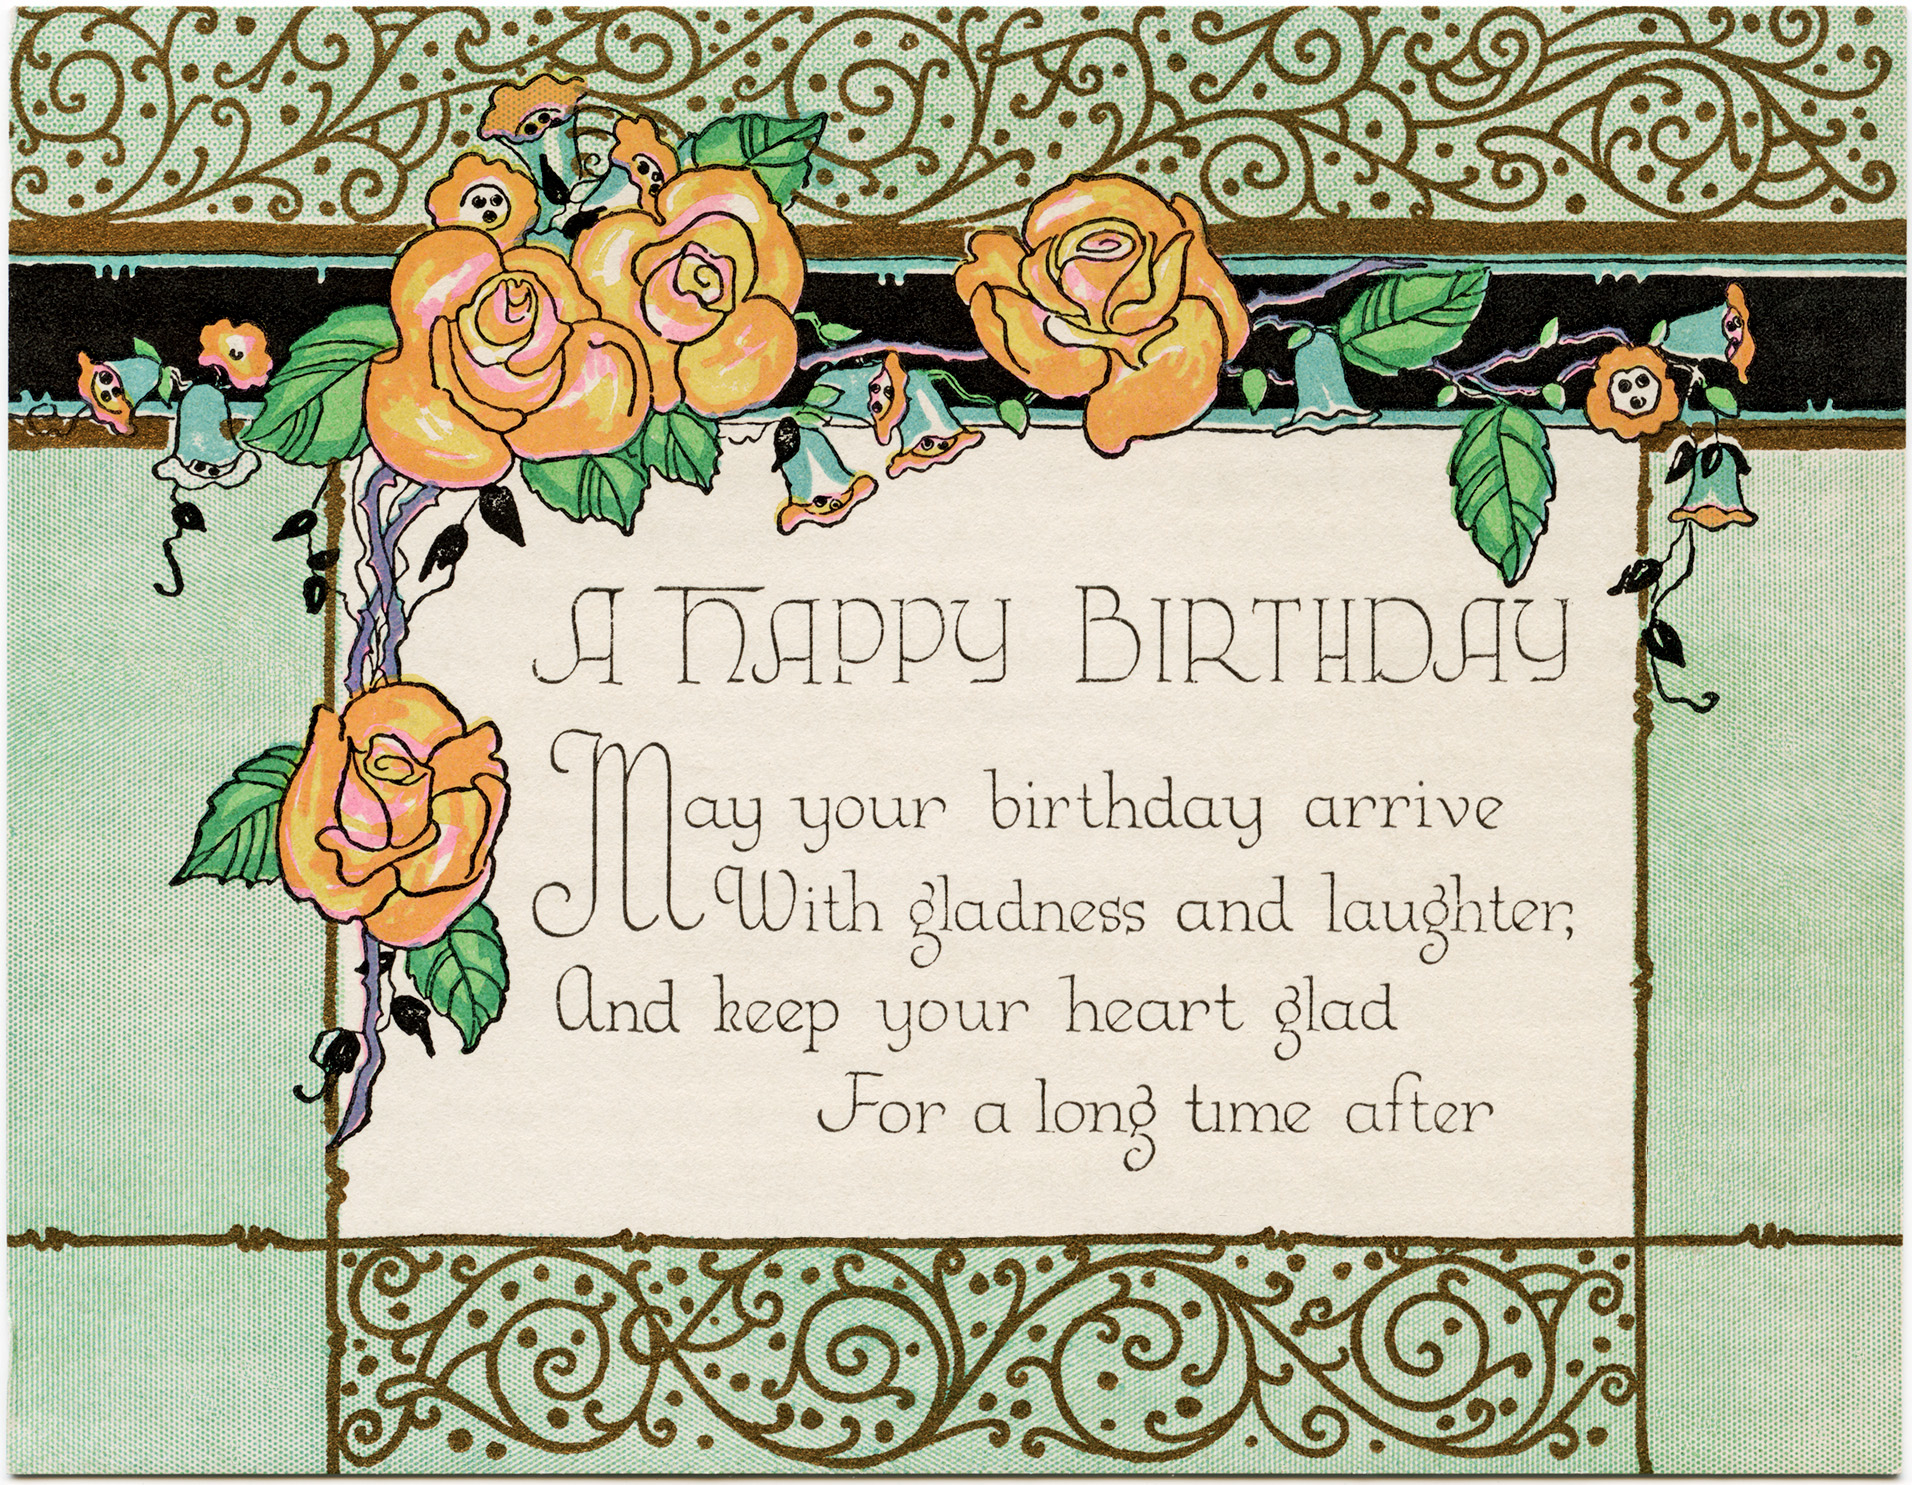 Art Deco Birthday Card ~ Free Download - Old Design Shop Blog